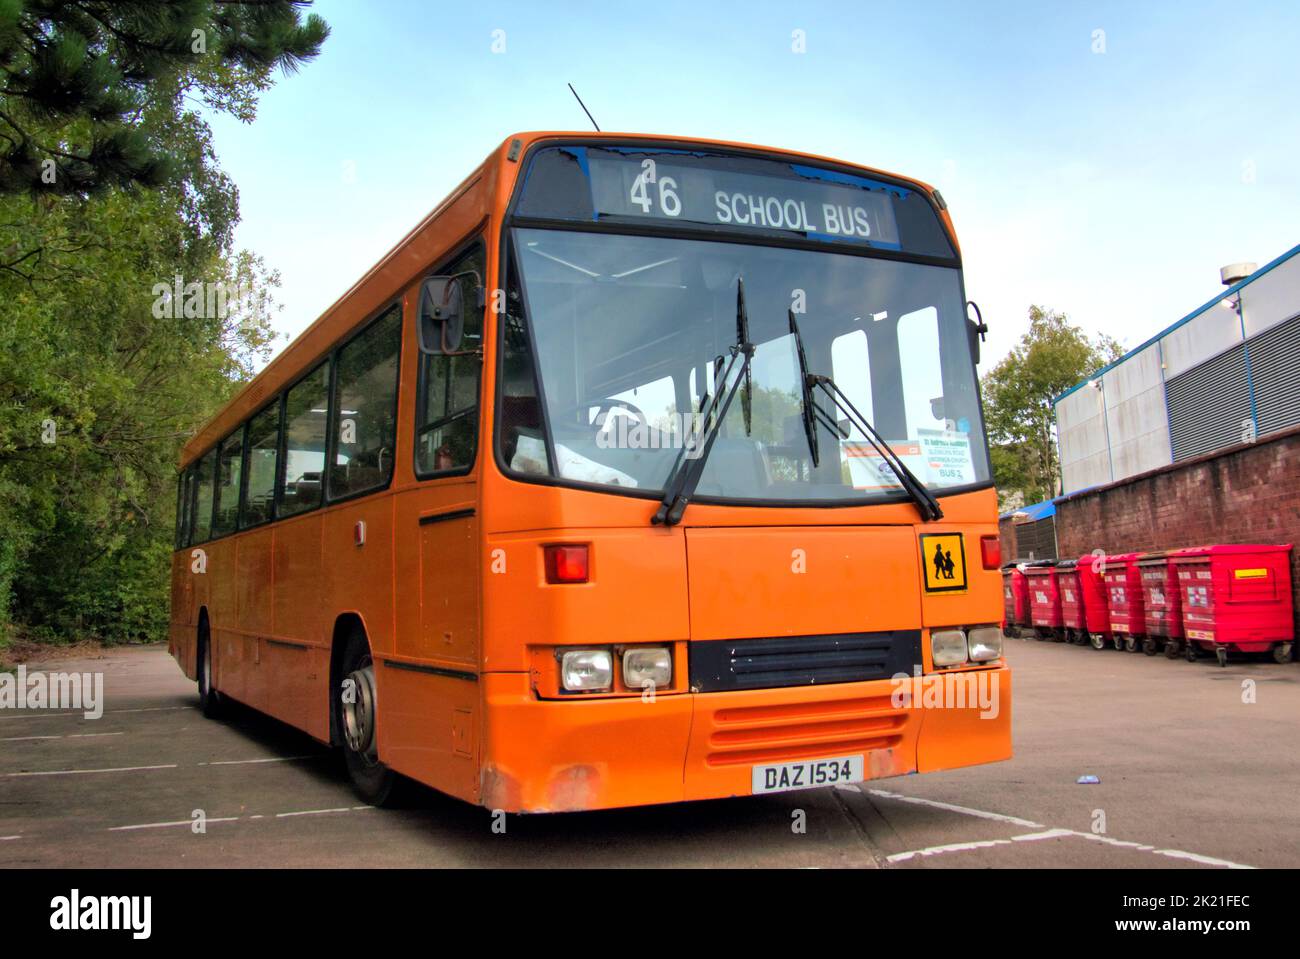 school bus orange 46 Glasgow, Scotland, UK Stock Photo